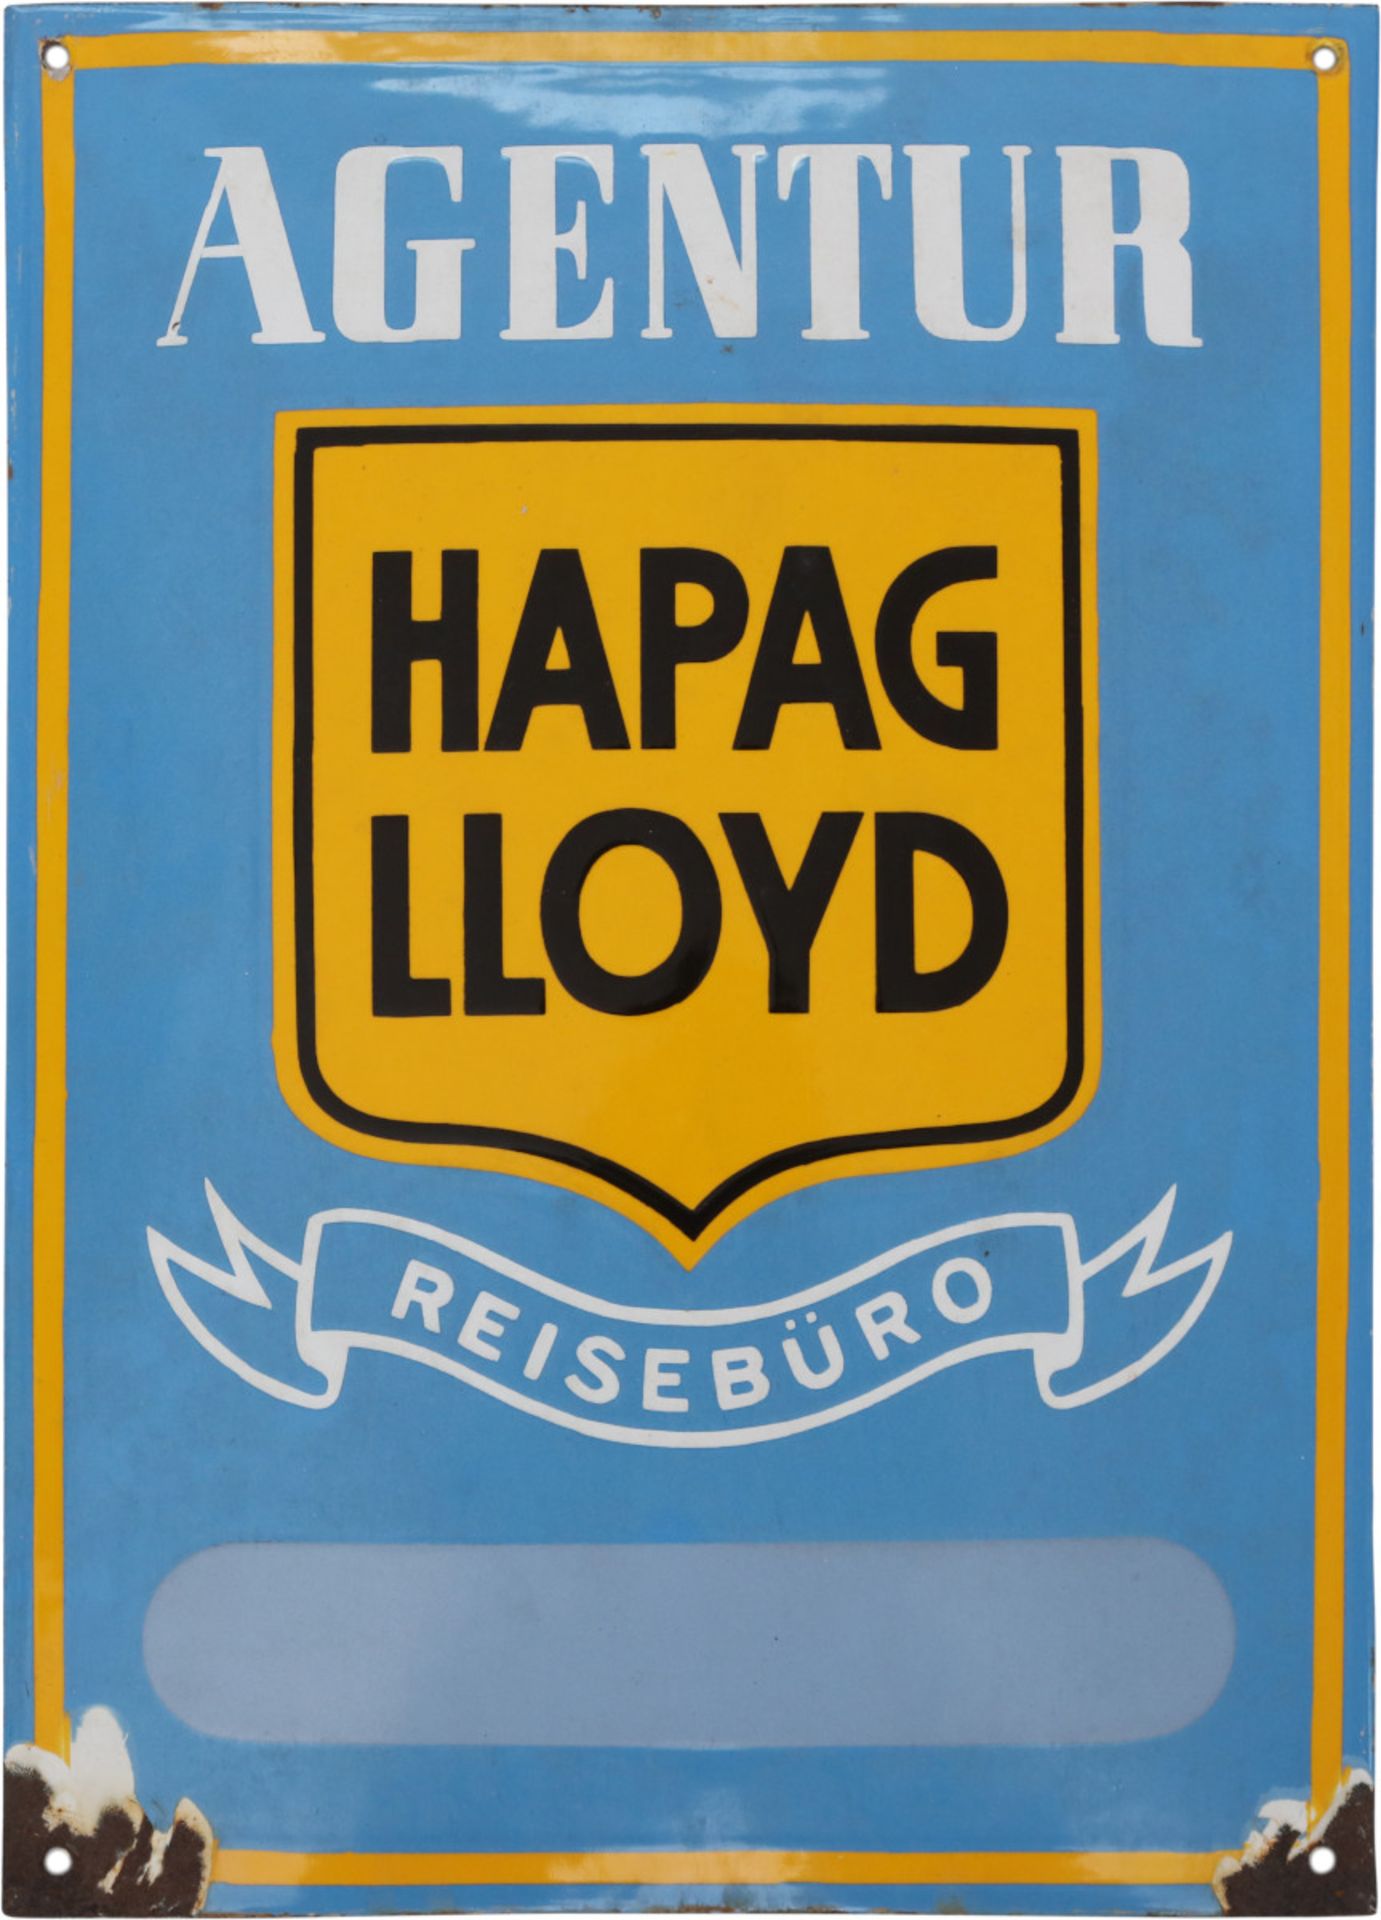 Hapag Lloyd agency enamel sign, Hamburg, around 1930